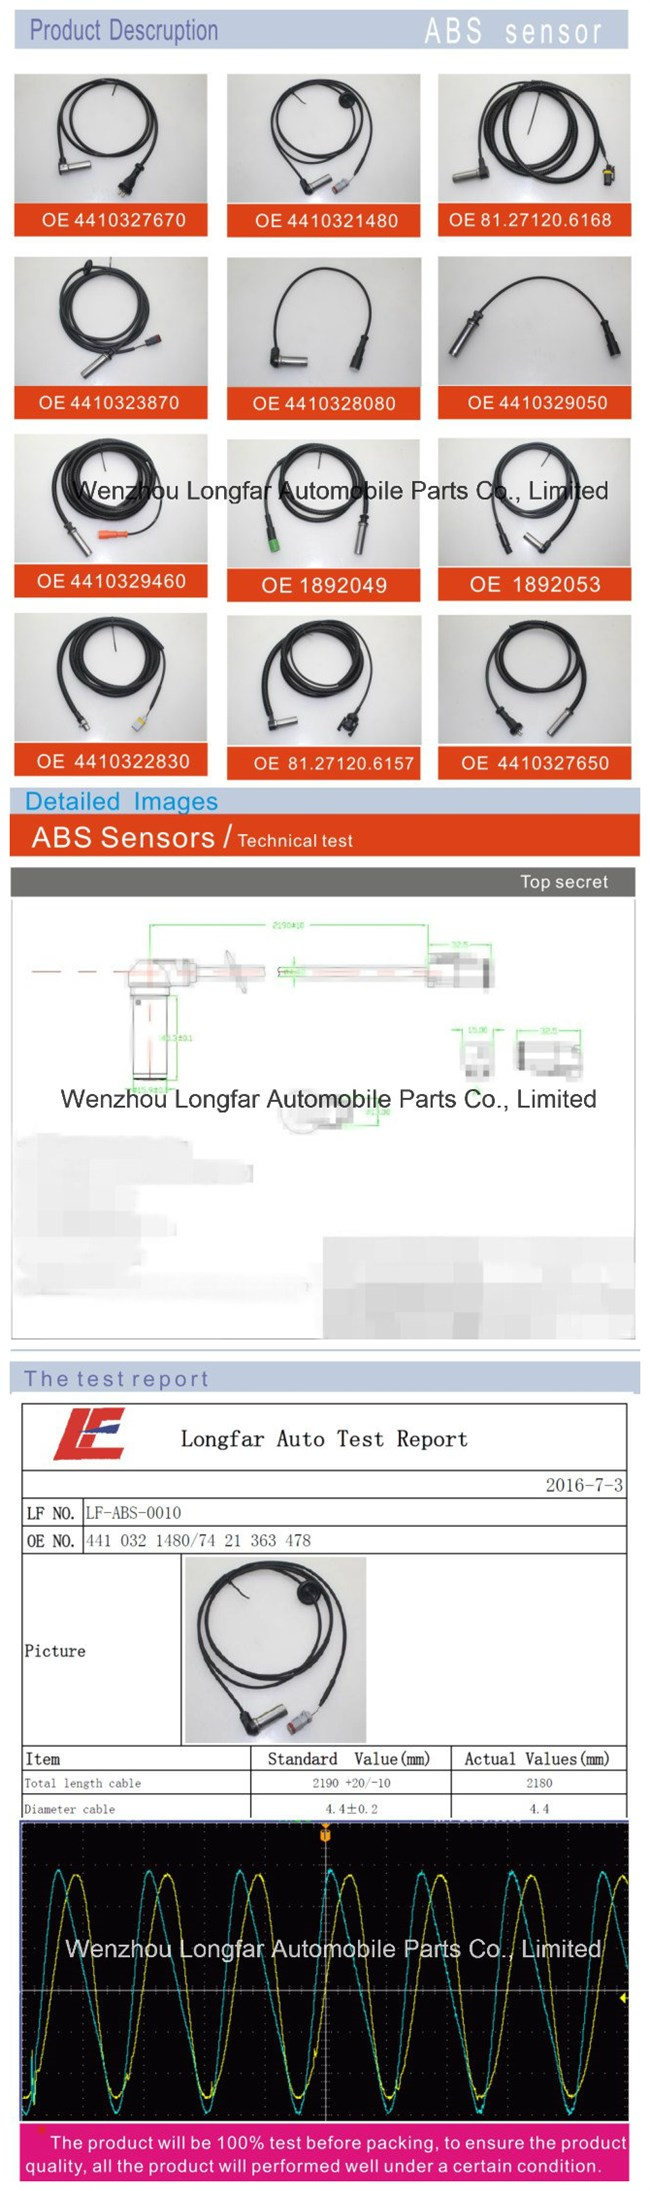 Auto Truck ABS Sensor Anti-Lock Braking System Transducer Indicator Sensor 81271206168,3.37146,12-34 899 0012,096.392,81.27120.6126,75746 for Man,Dt,Meyle